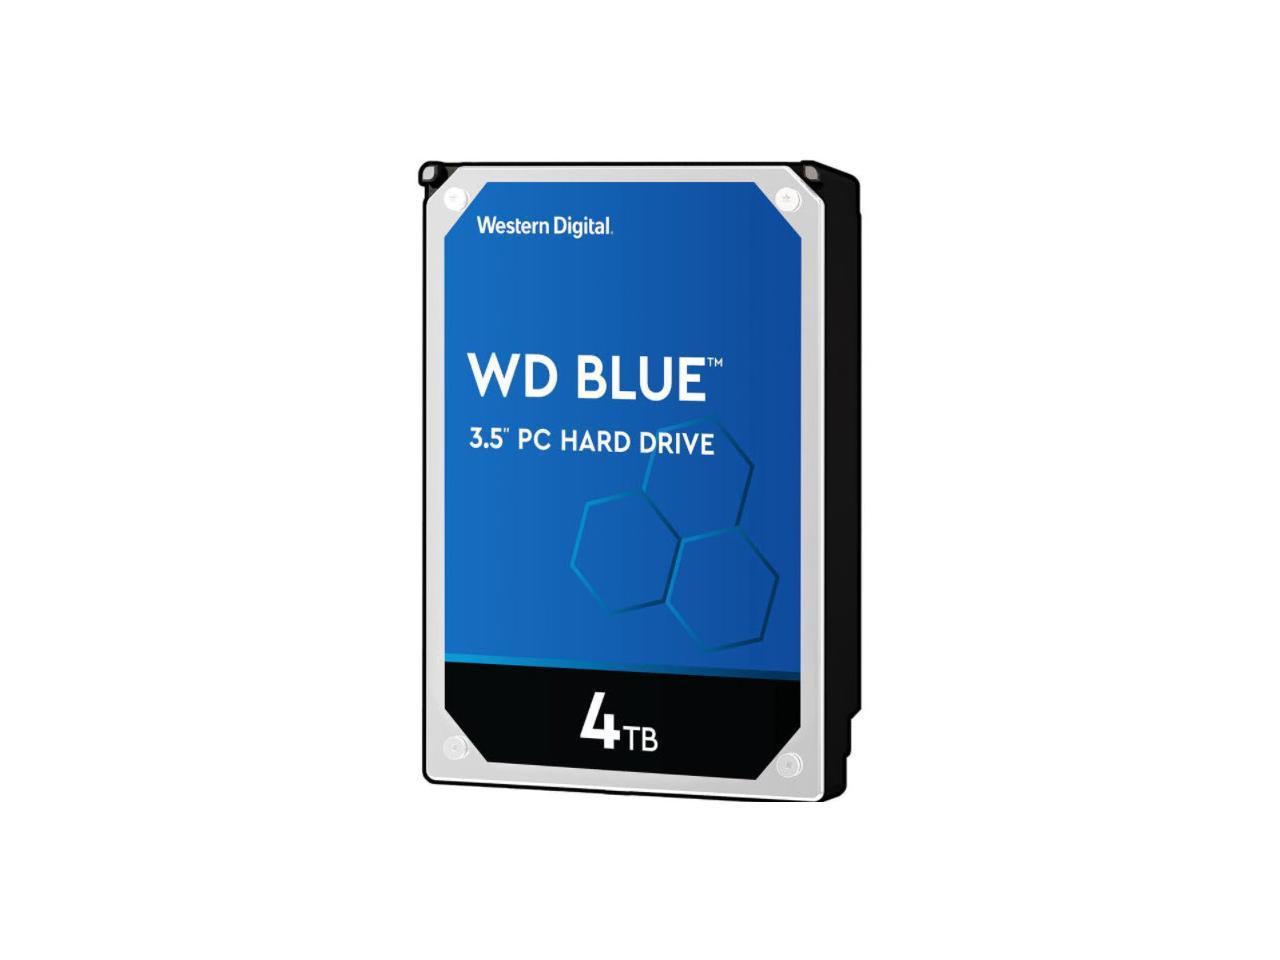 WD Blue 4TB Desktop Hard Disk Drive $59.99 at Newegg